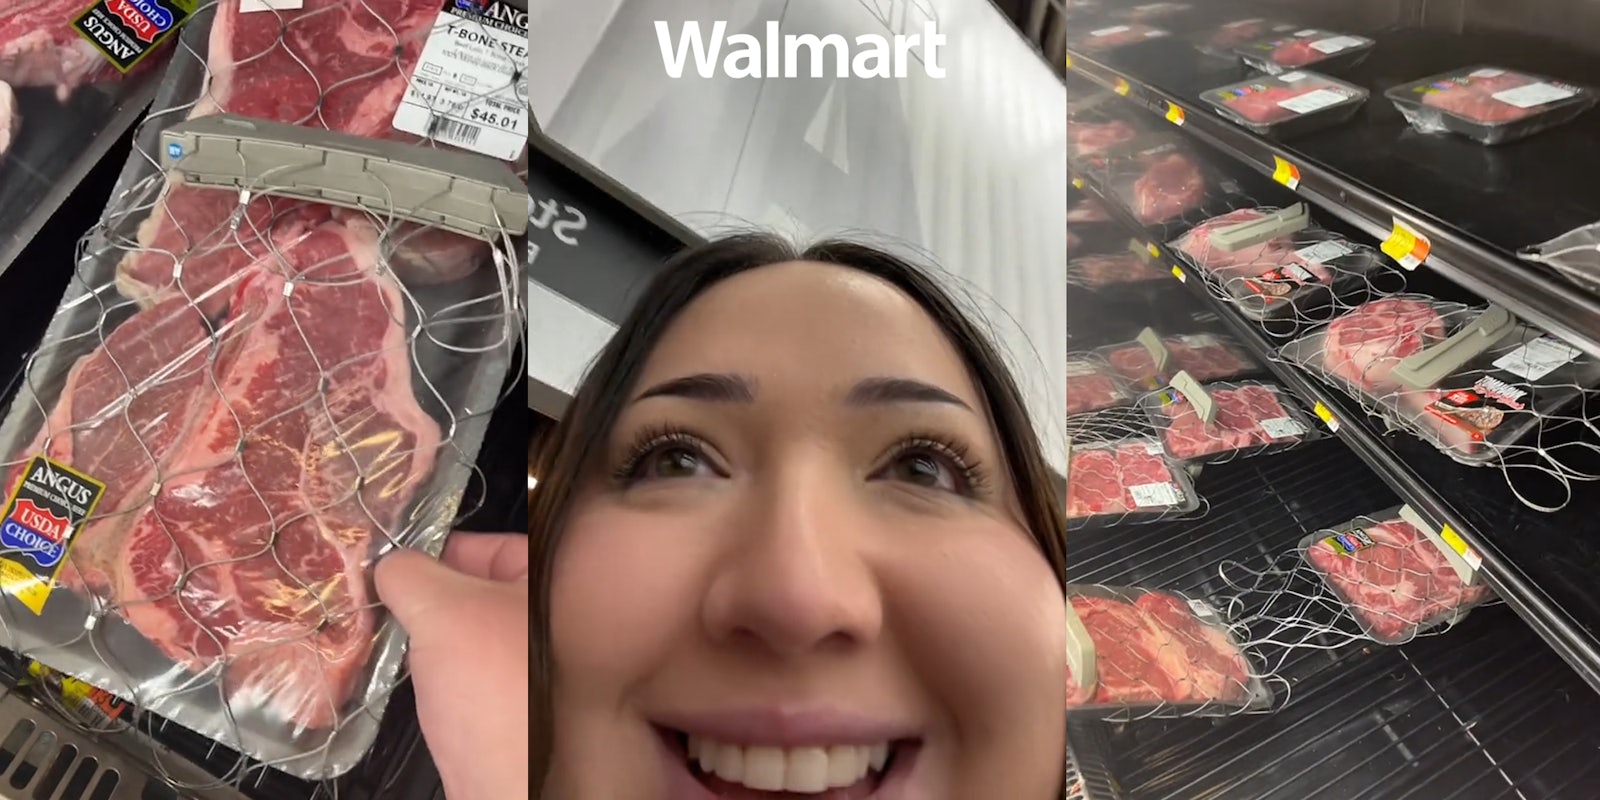 Walmart steak locked up in hand (l) Walmart customer with Walmart logo at top centered (c) Walmart meat display showing meat locked up (r)